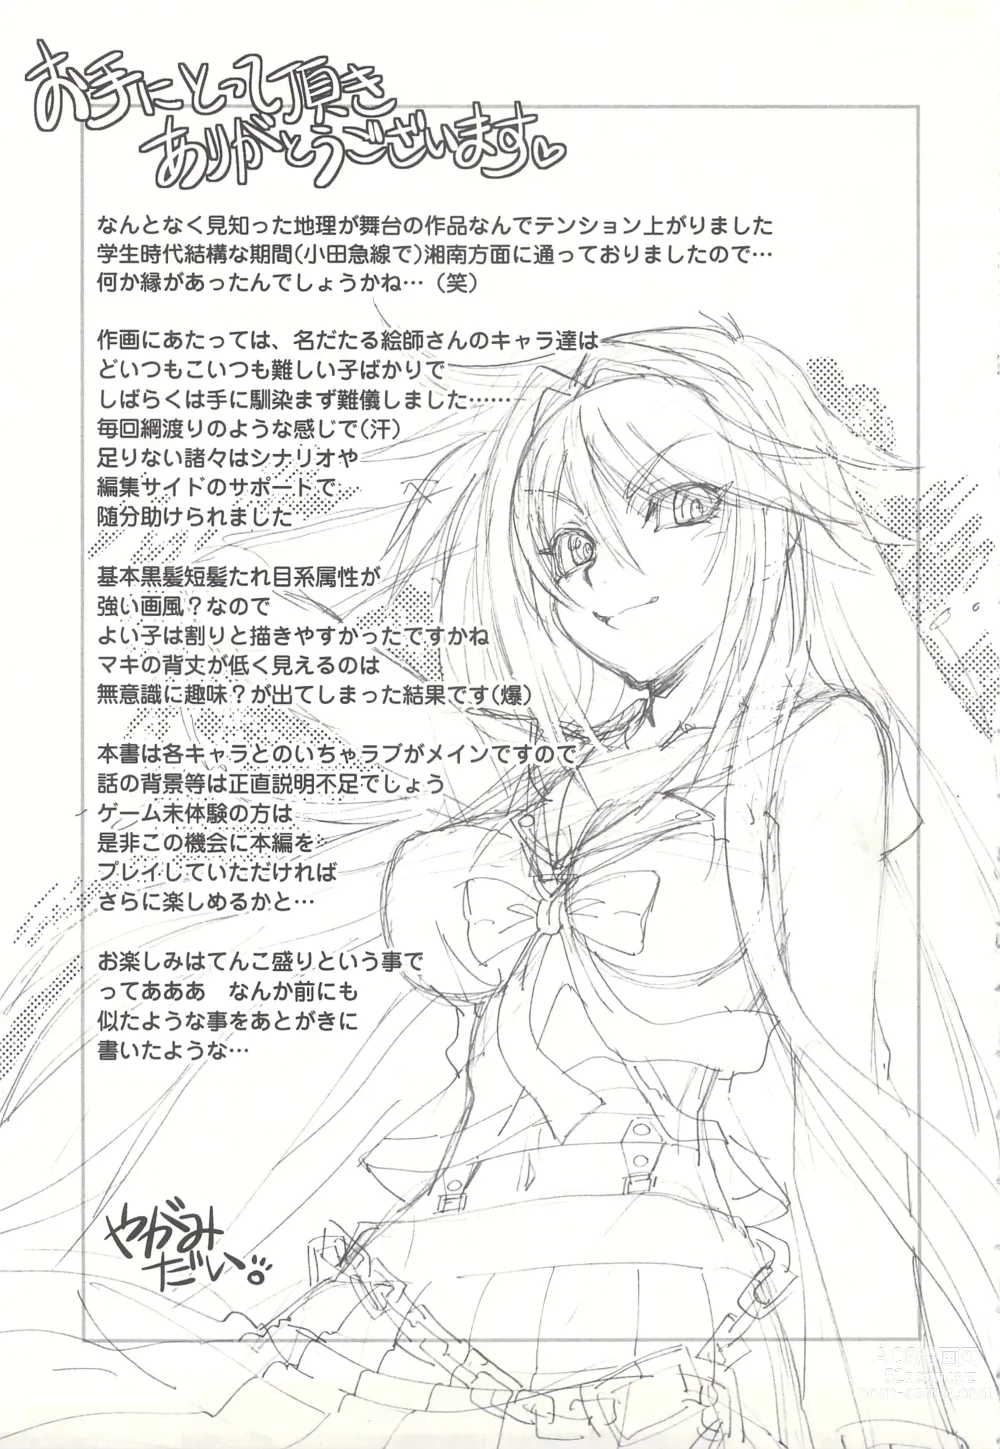 Page 209 of manga Tsujidou-san no Virgin Road Adult Edition